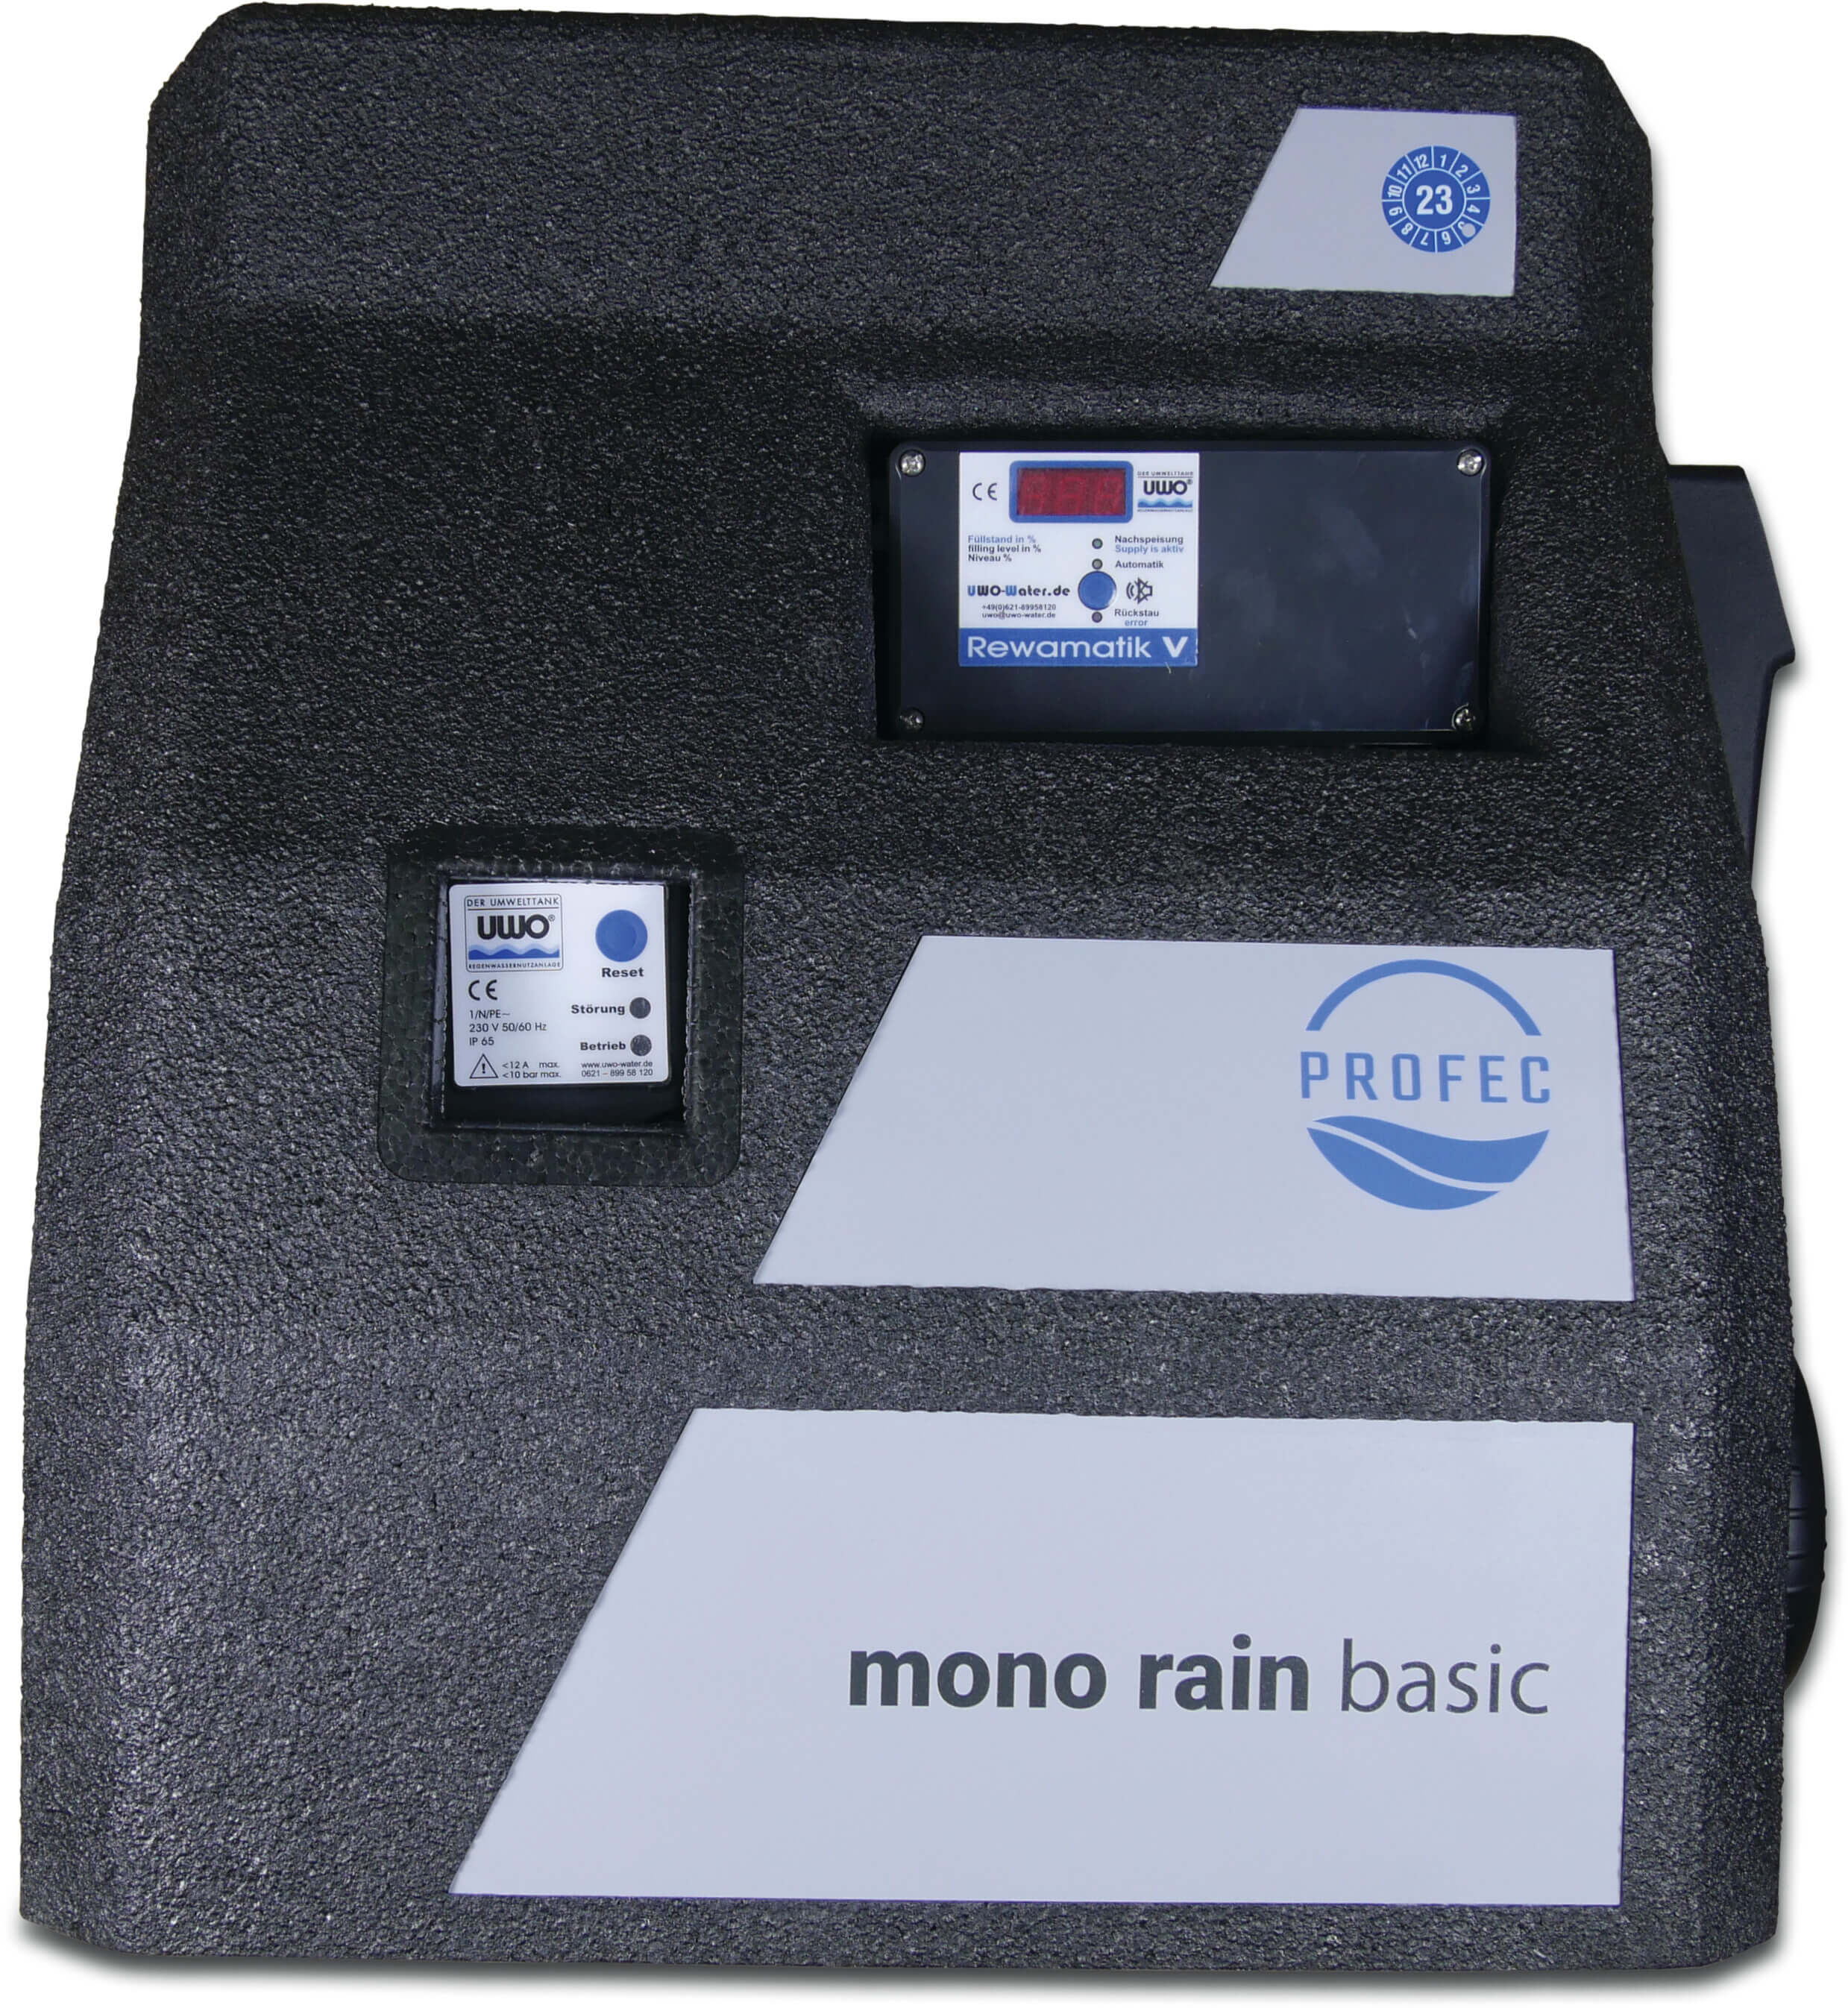 Profec Regenwasser Versorgungsmanager  4bar DVGW type Mono rain basic with self priming pump and pressure switch